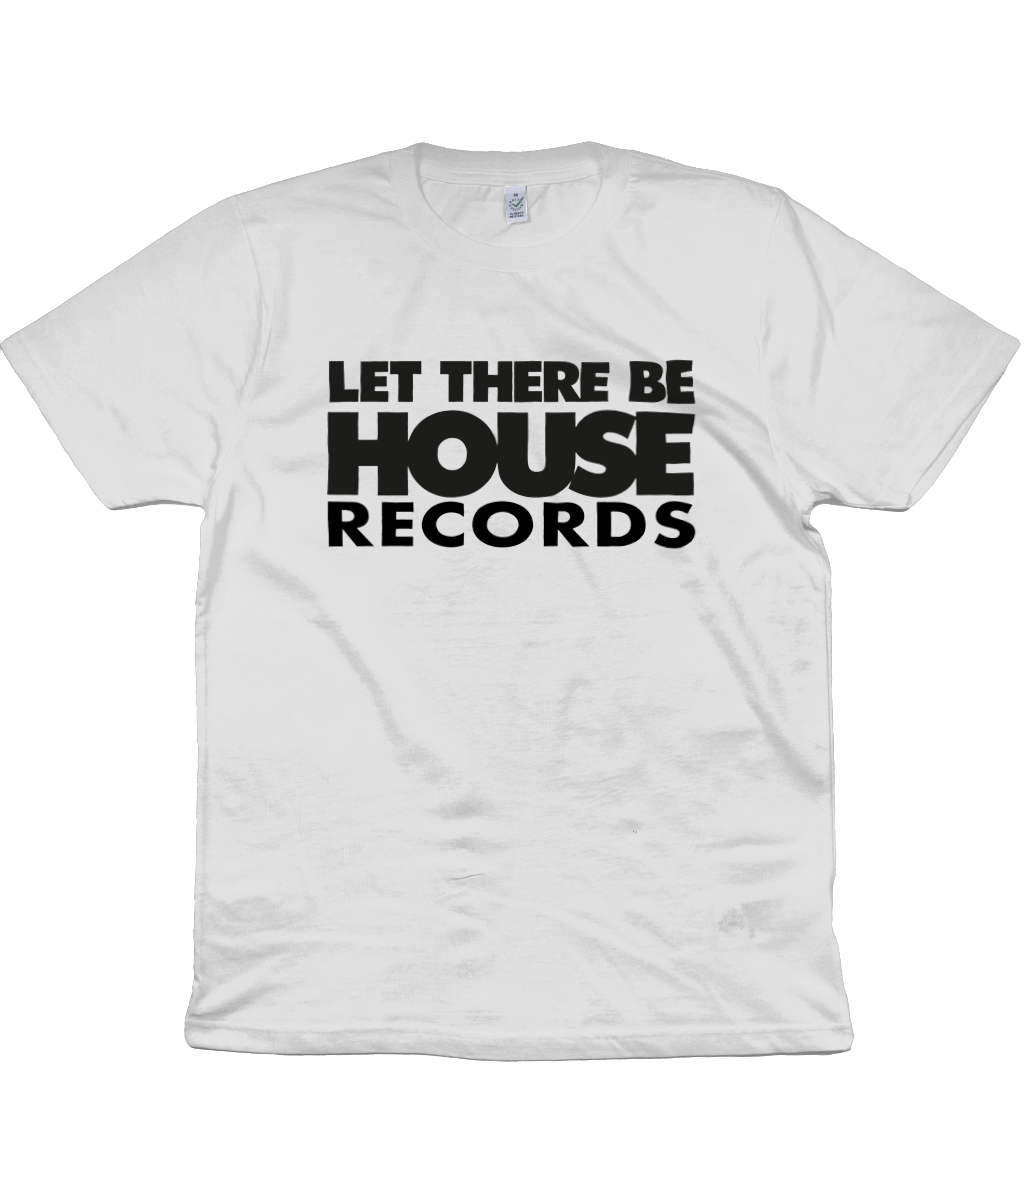 T-Shirt LTBH Records Black